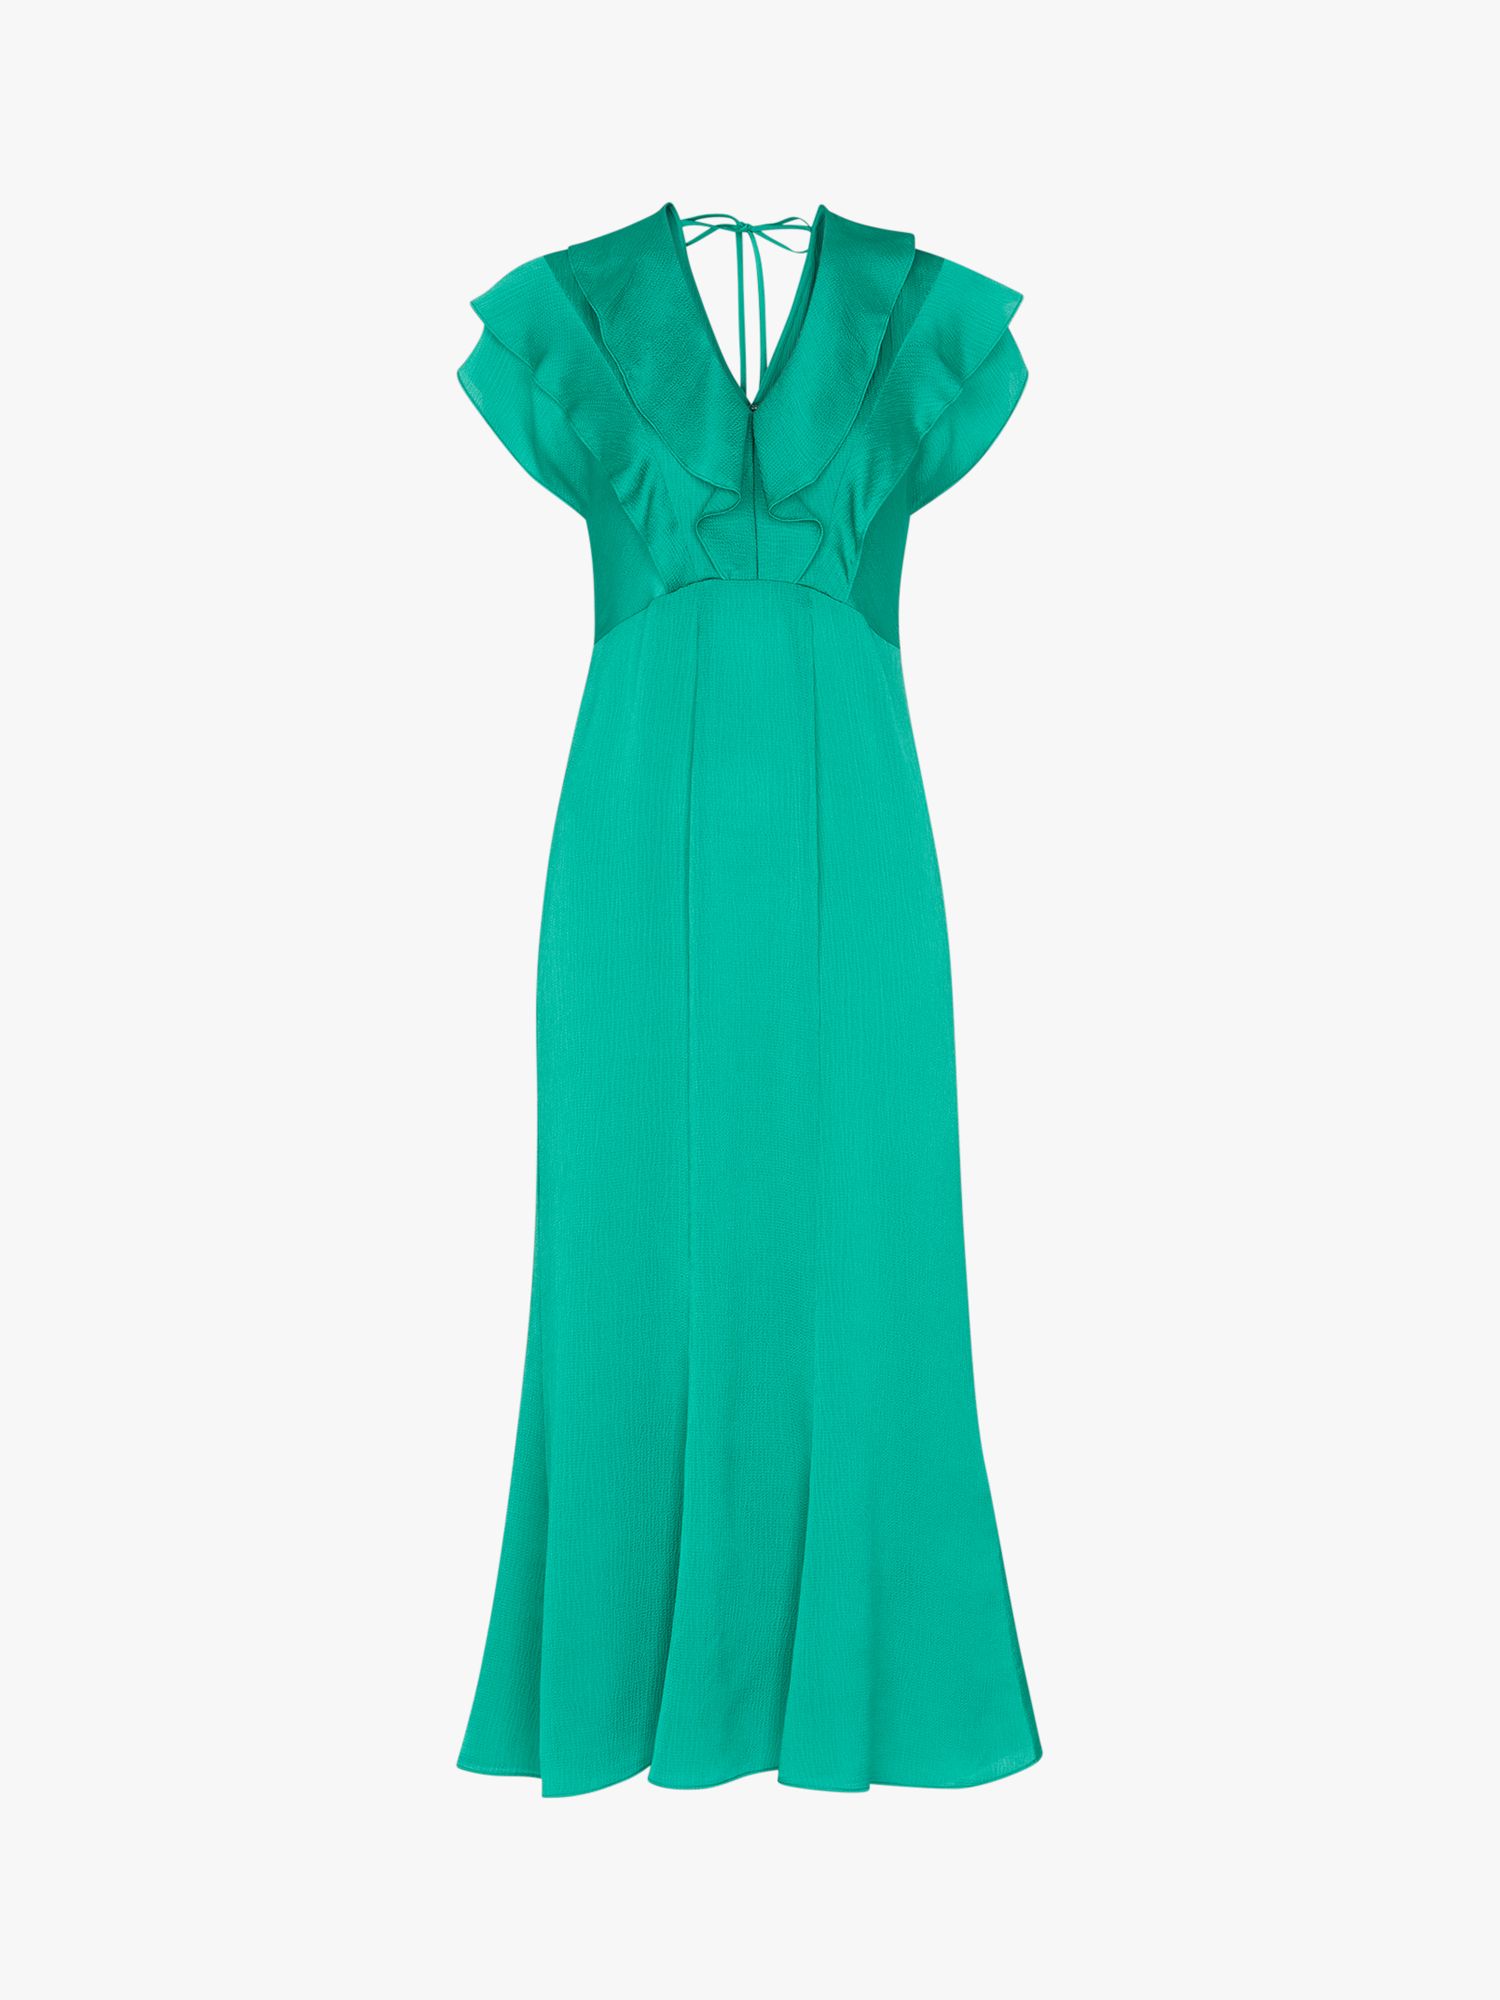 Whistles Adeline Frill Midi Dress, Green at John Lewis & Partners